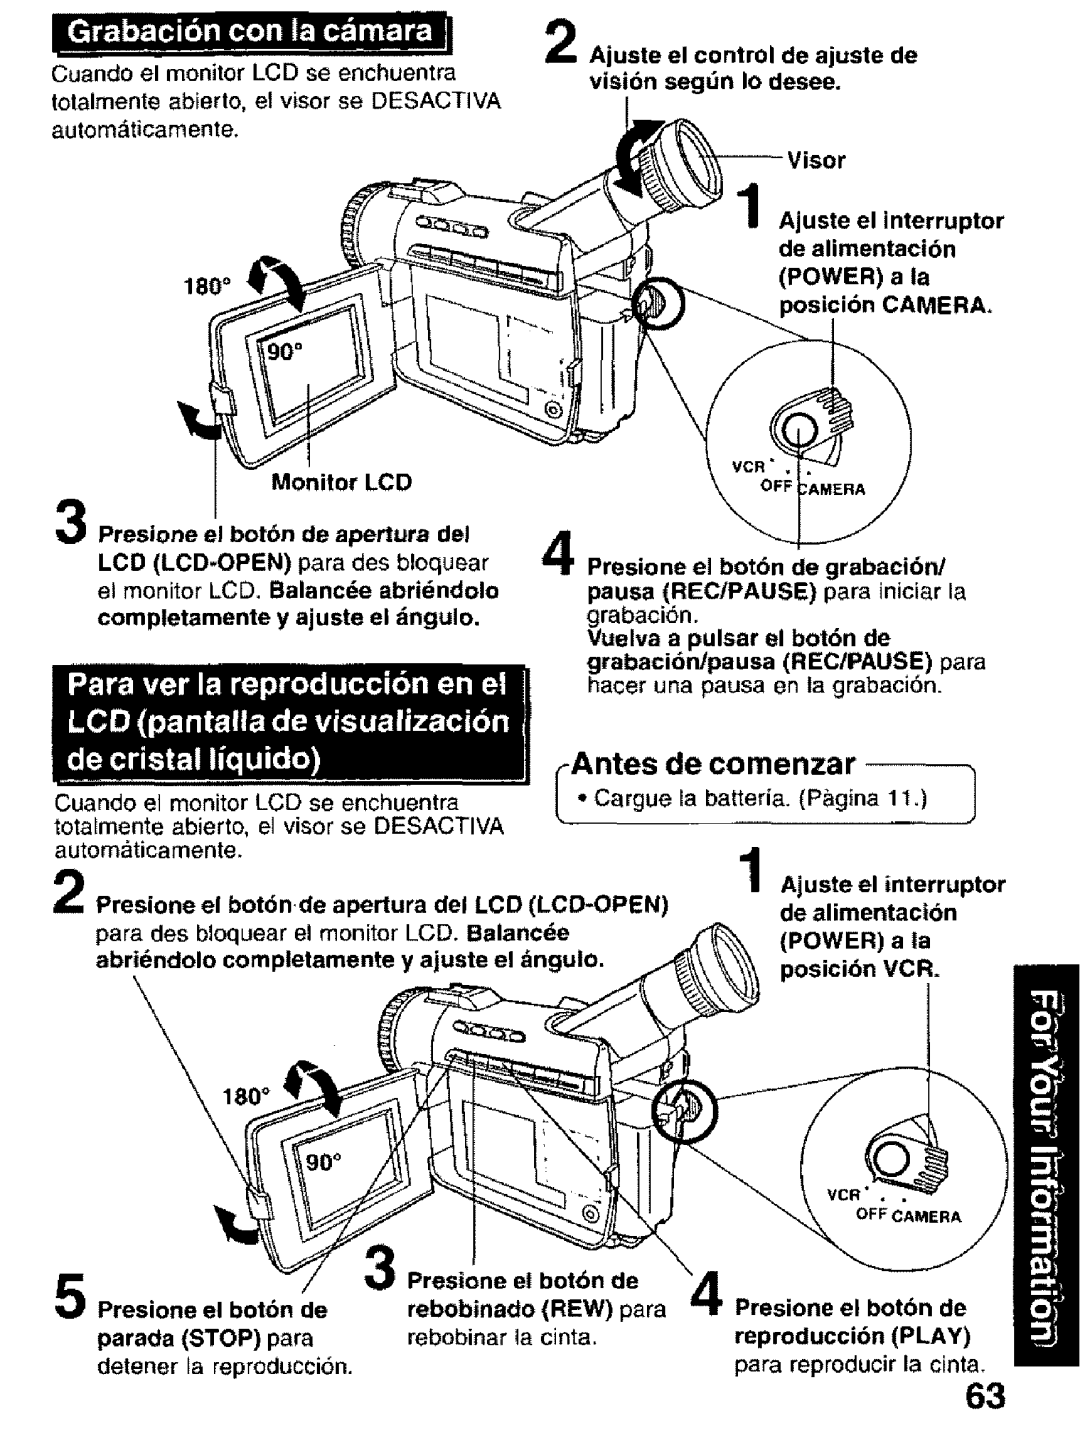 Panasonic PV-DV101 manual iAntes, de comenzar 